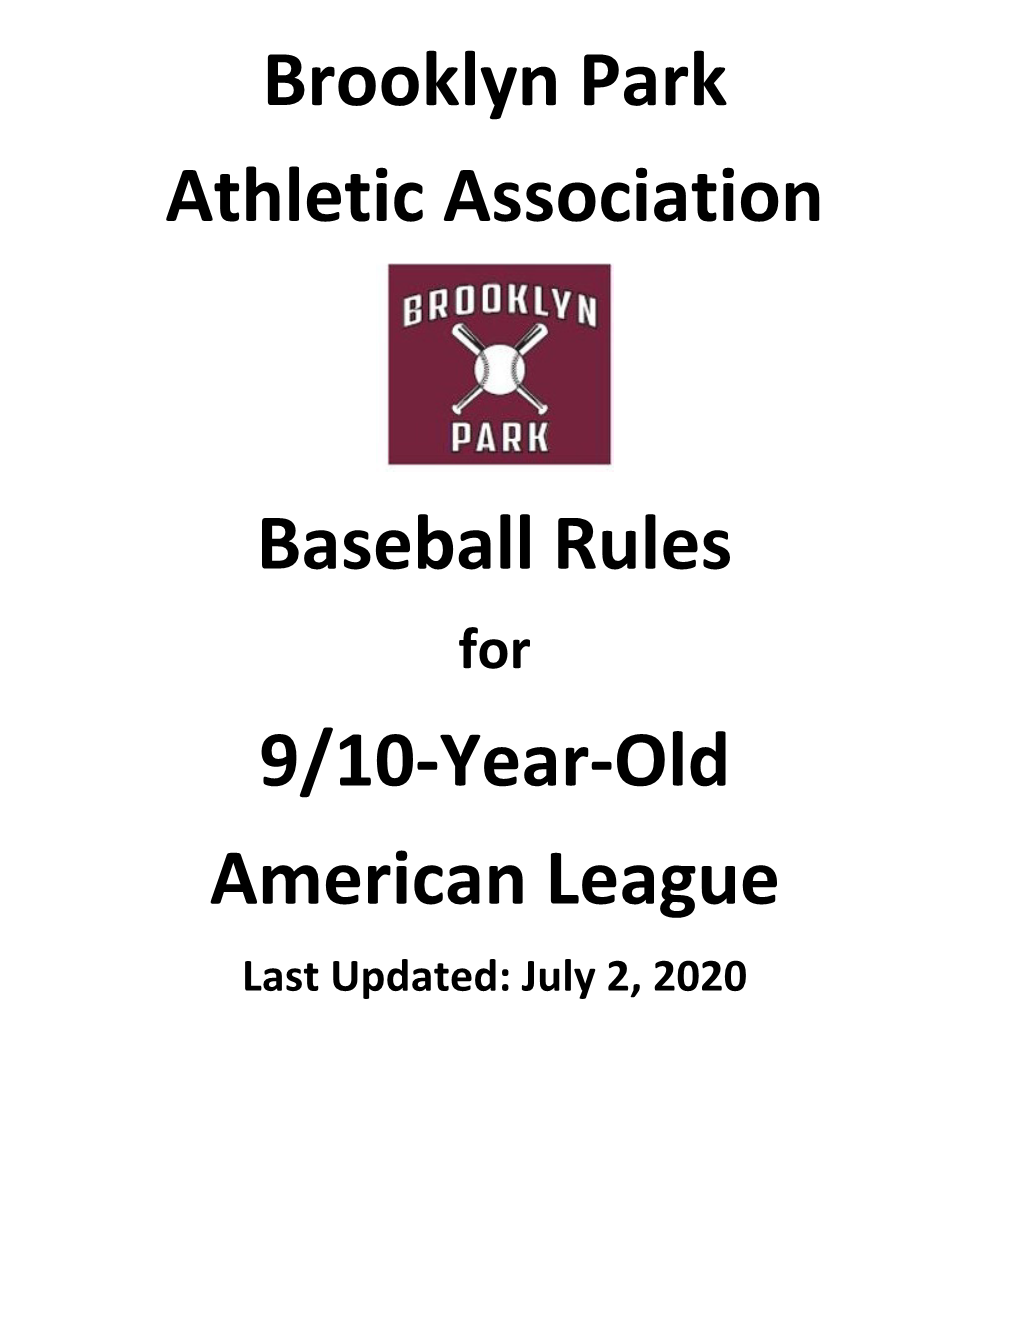 Brooklyn Park Athletic Association Baseball Rules 9/10-Year-Old